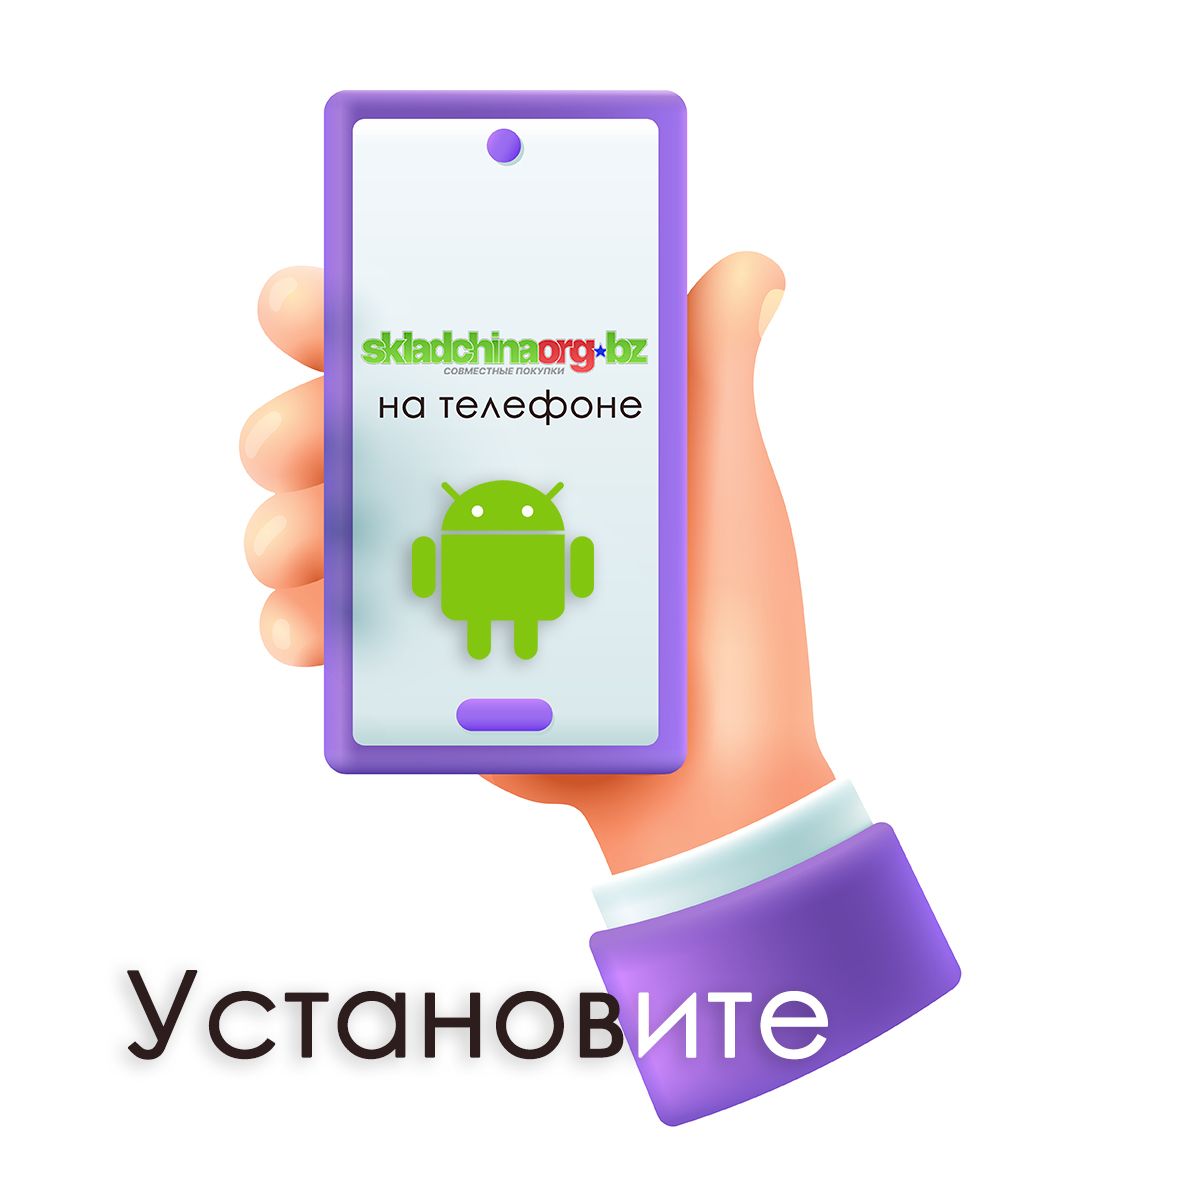 Phone in human hand 3d cartoon style icon.jpg